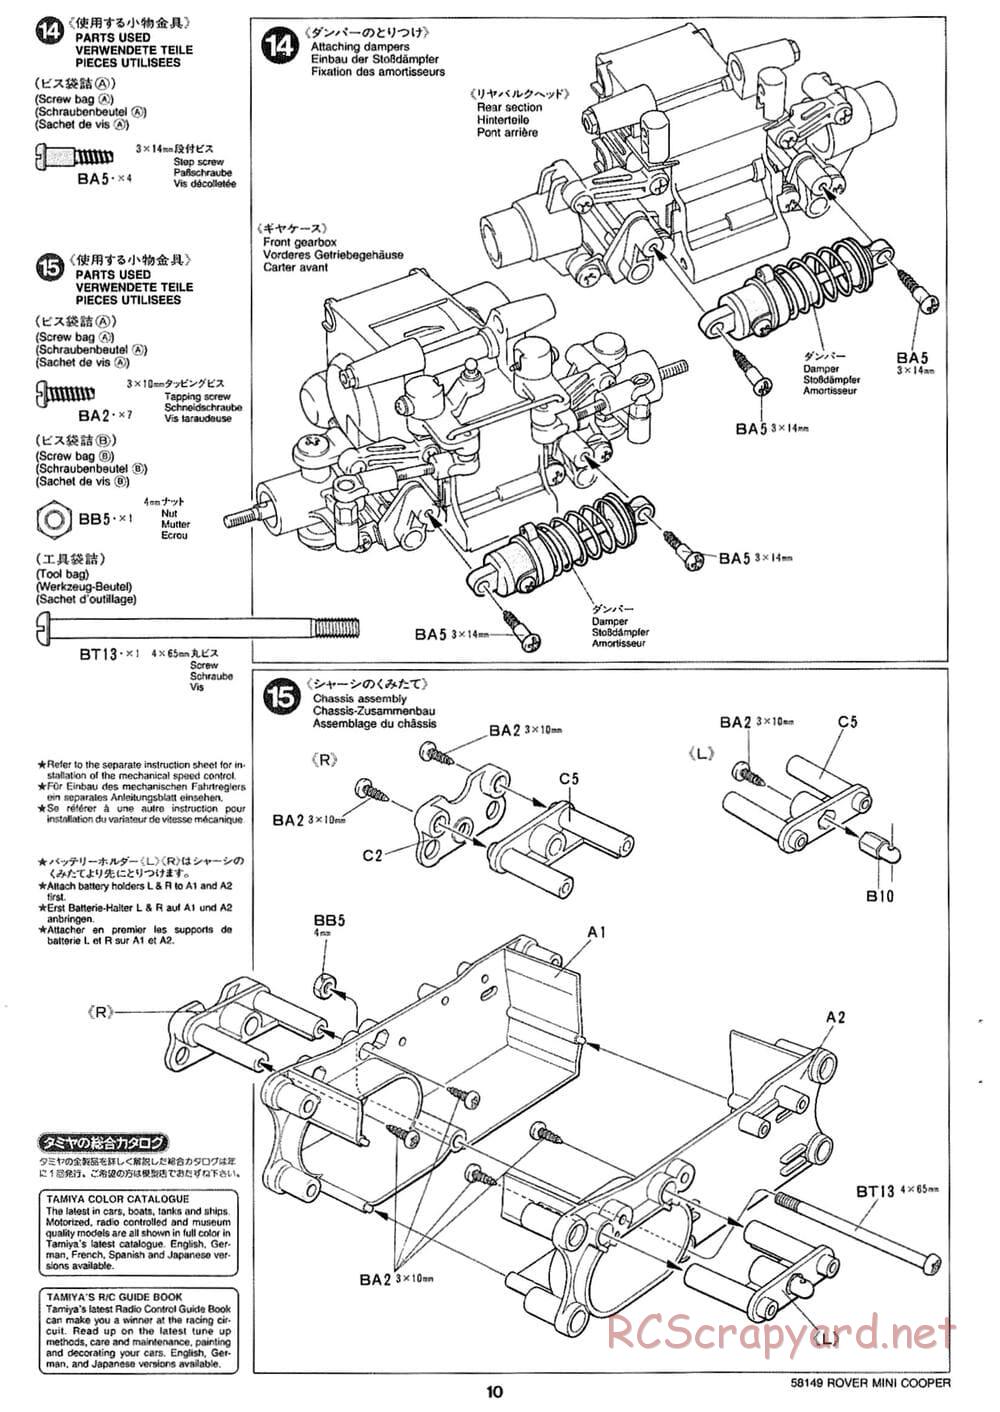 Tamiya - Rover Mini Cooper - M01 Chassis - Manual - Page 10